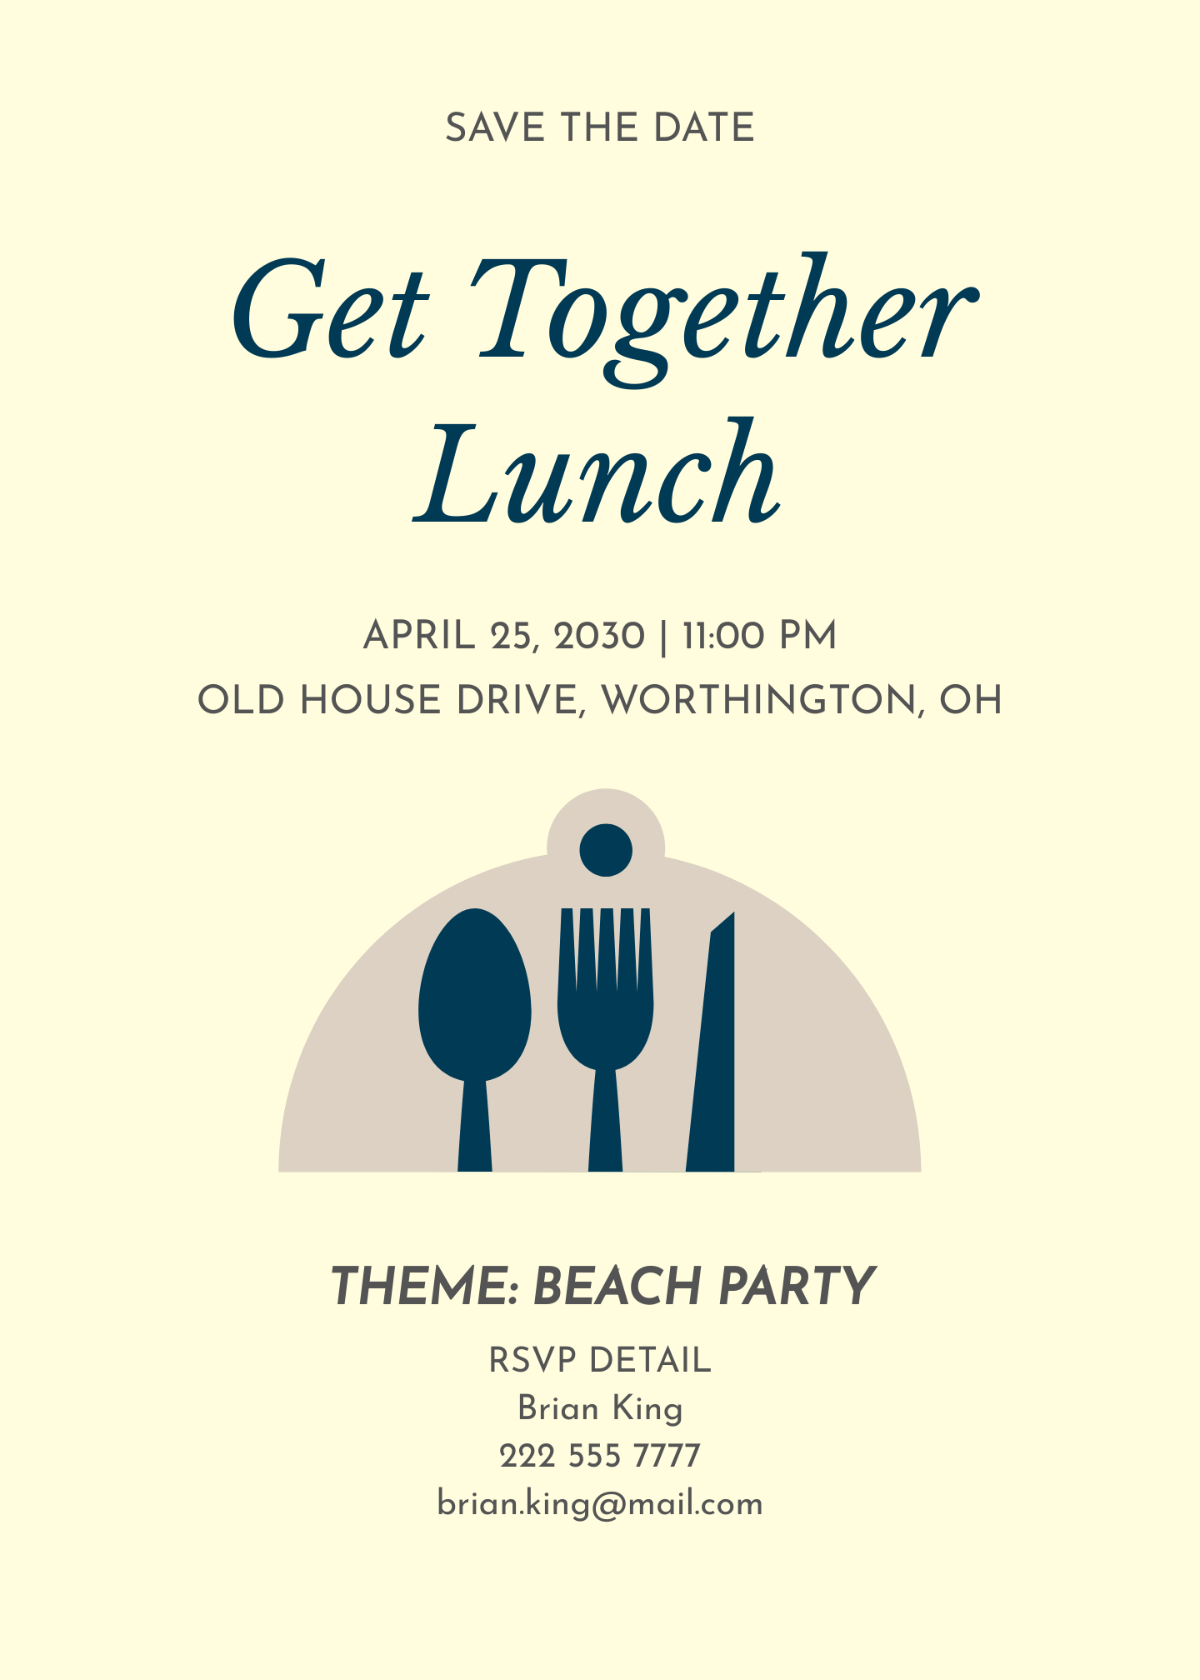 Get Together Lunch Invitation